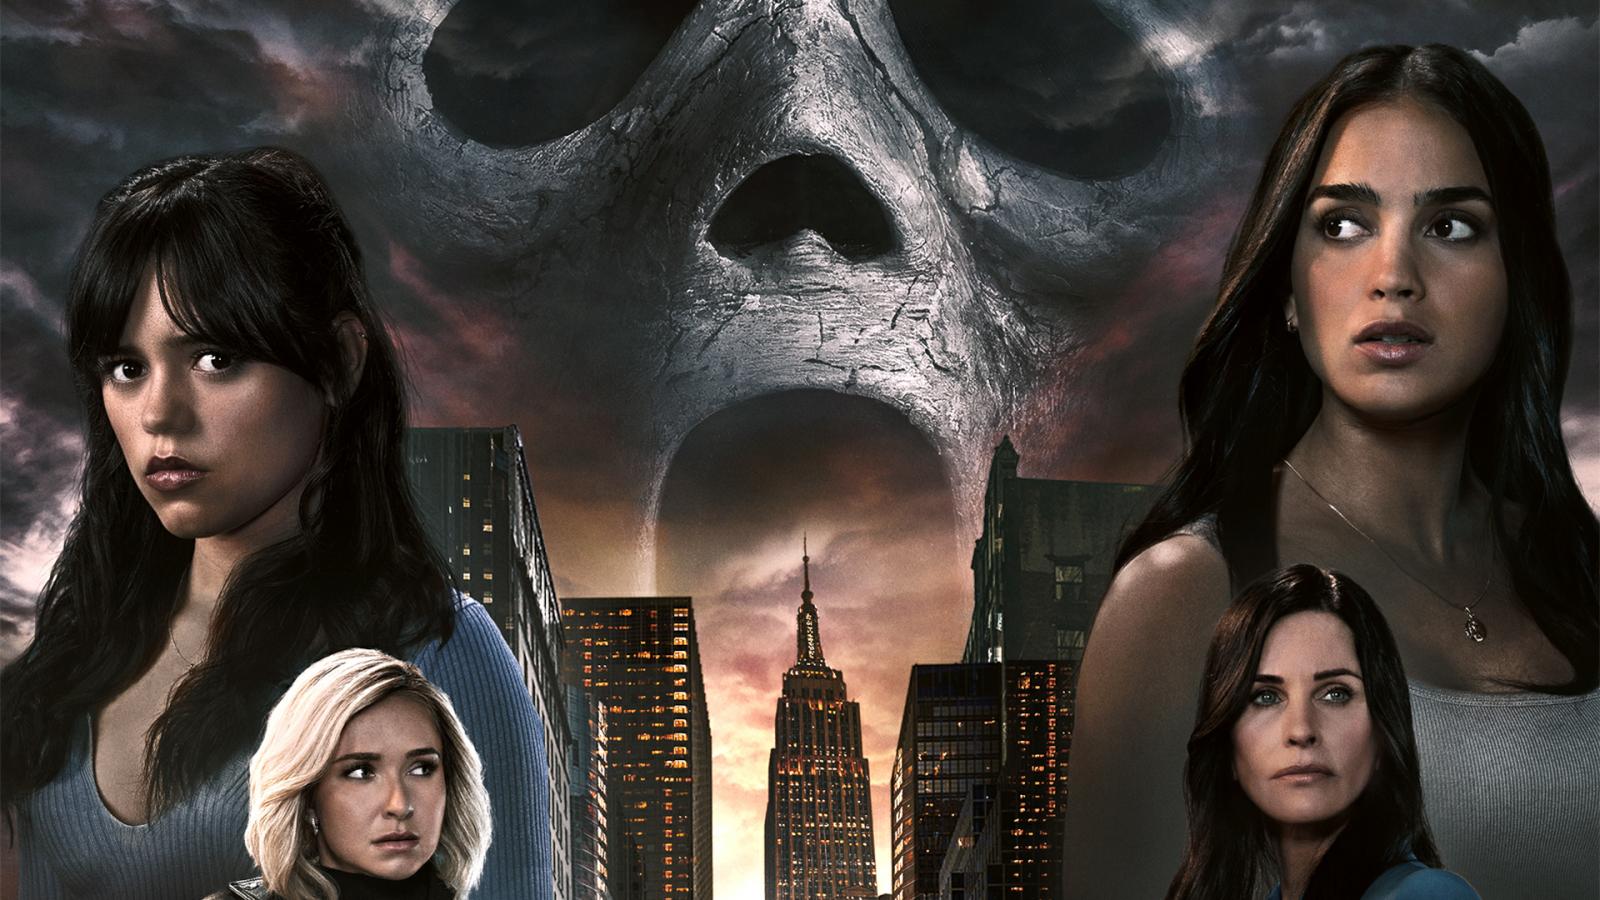 Scream 6 review: a bloodier, better sequel